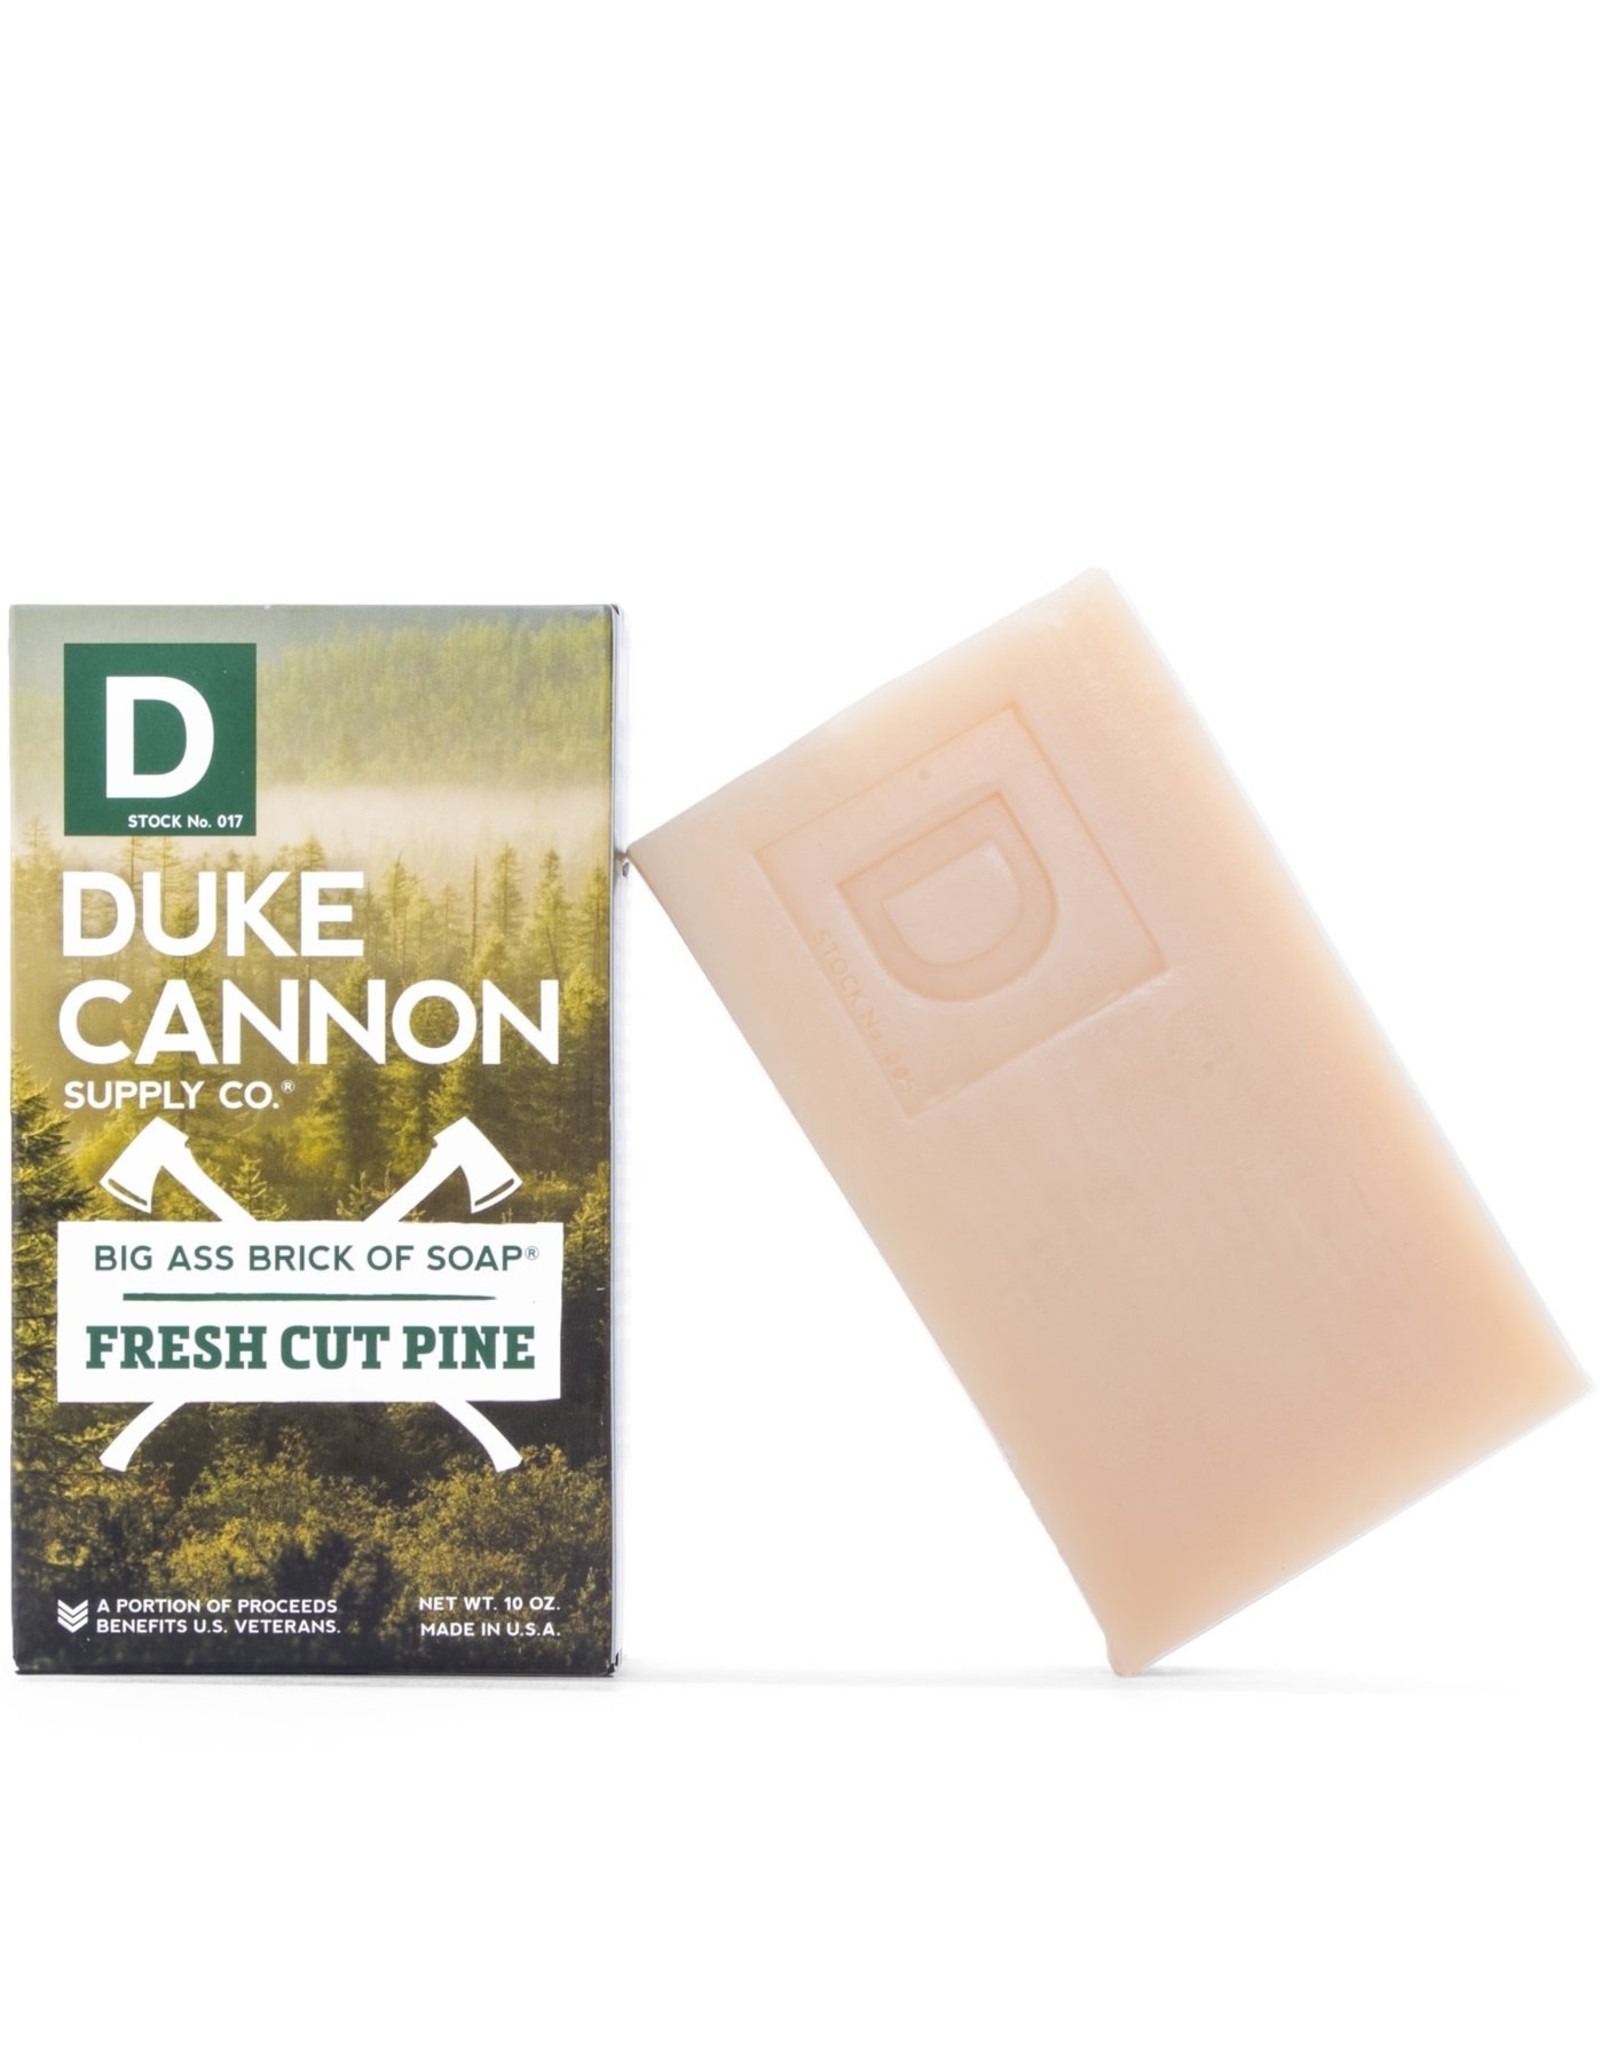 Duke Cannon Supply Co. Fresh Cut Pine Big Ass Brick of Soap